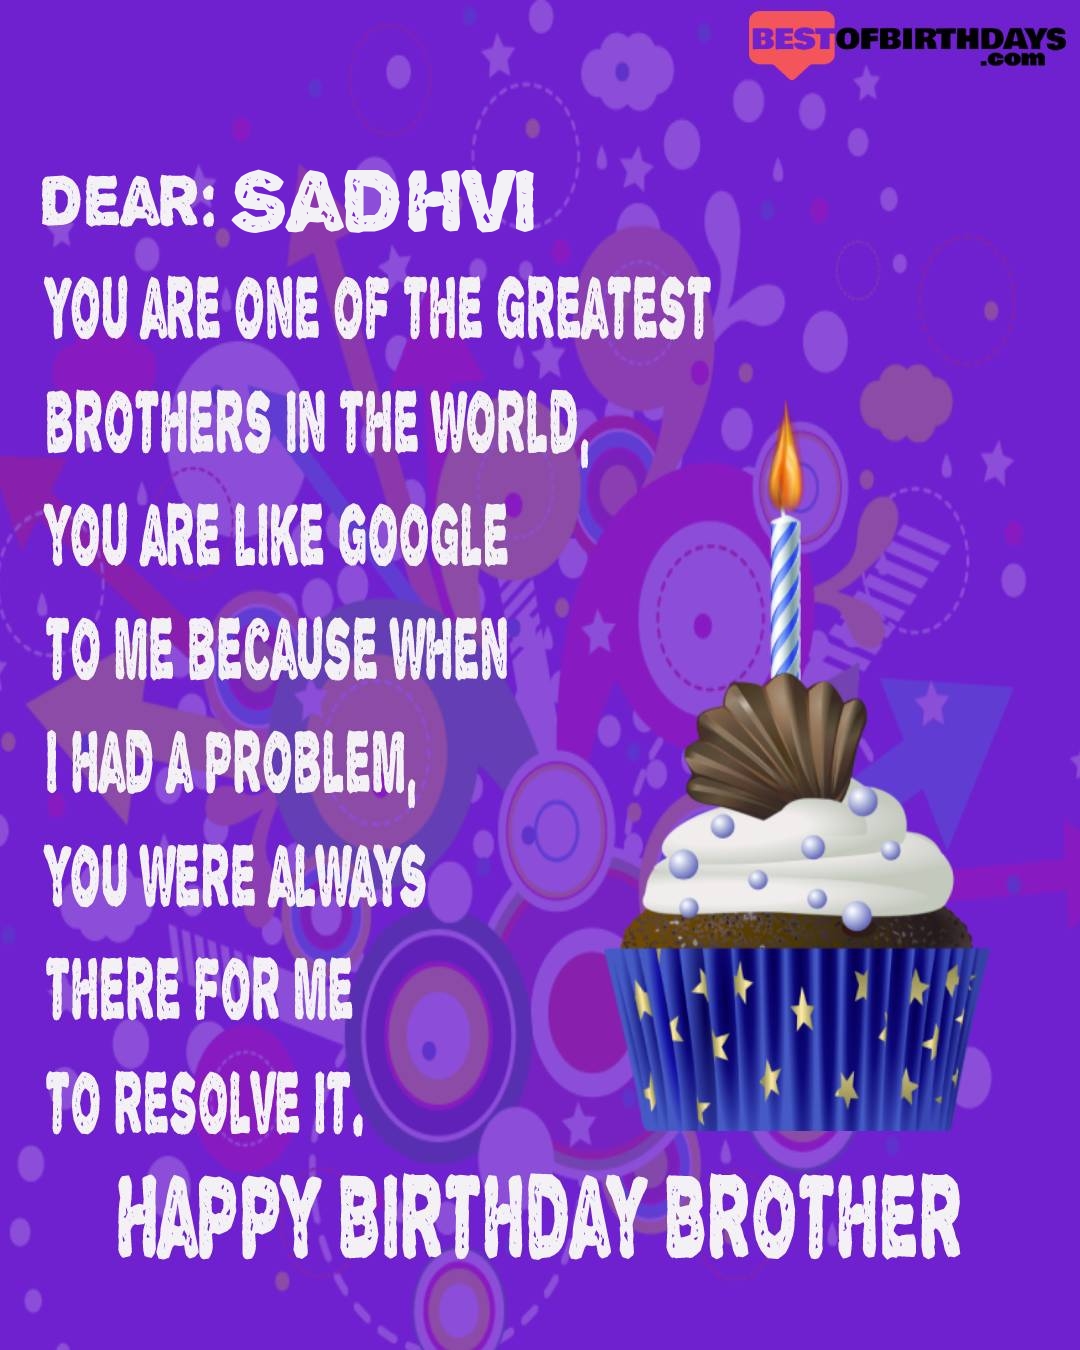 Happy birthday sadhvi bhai brother bro